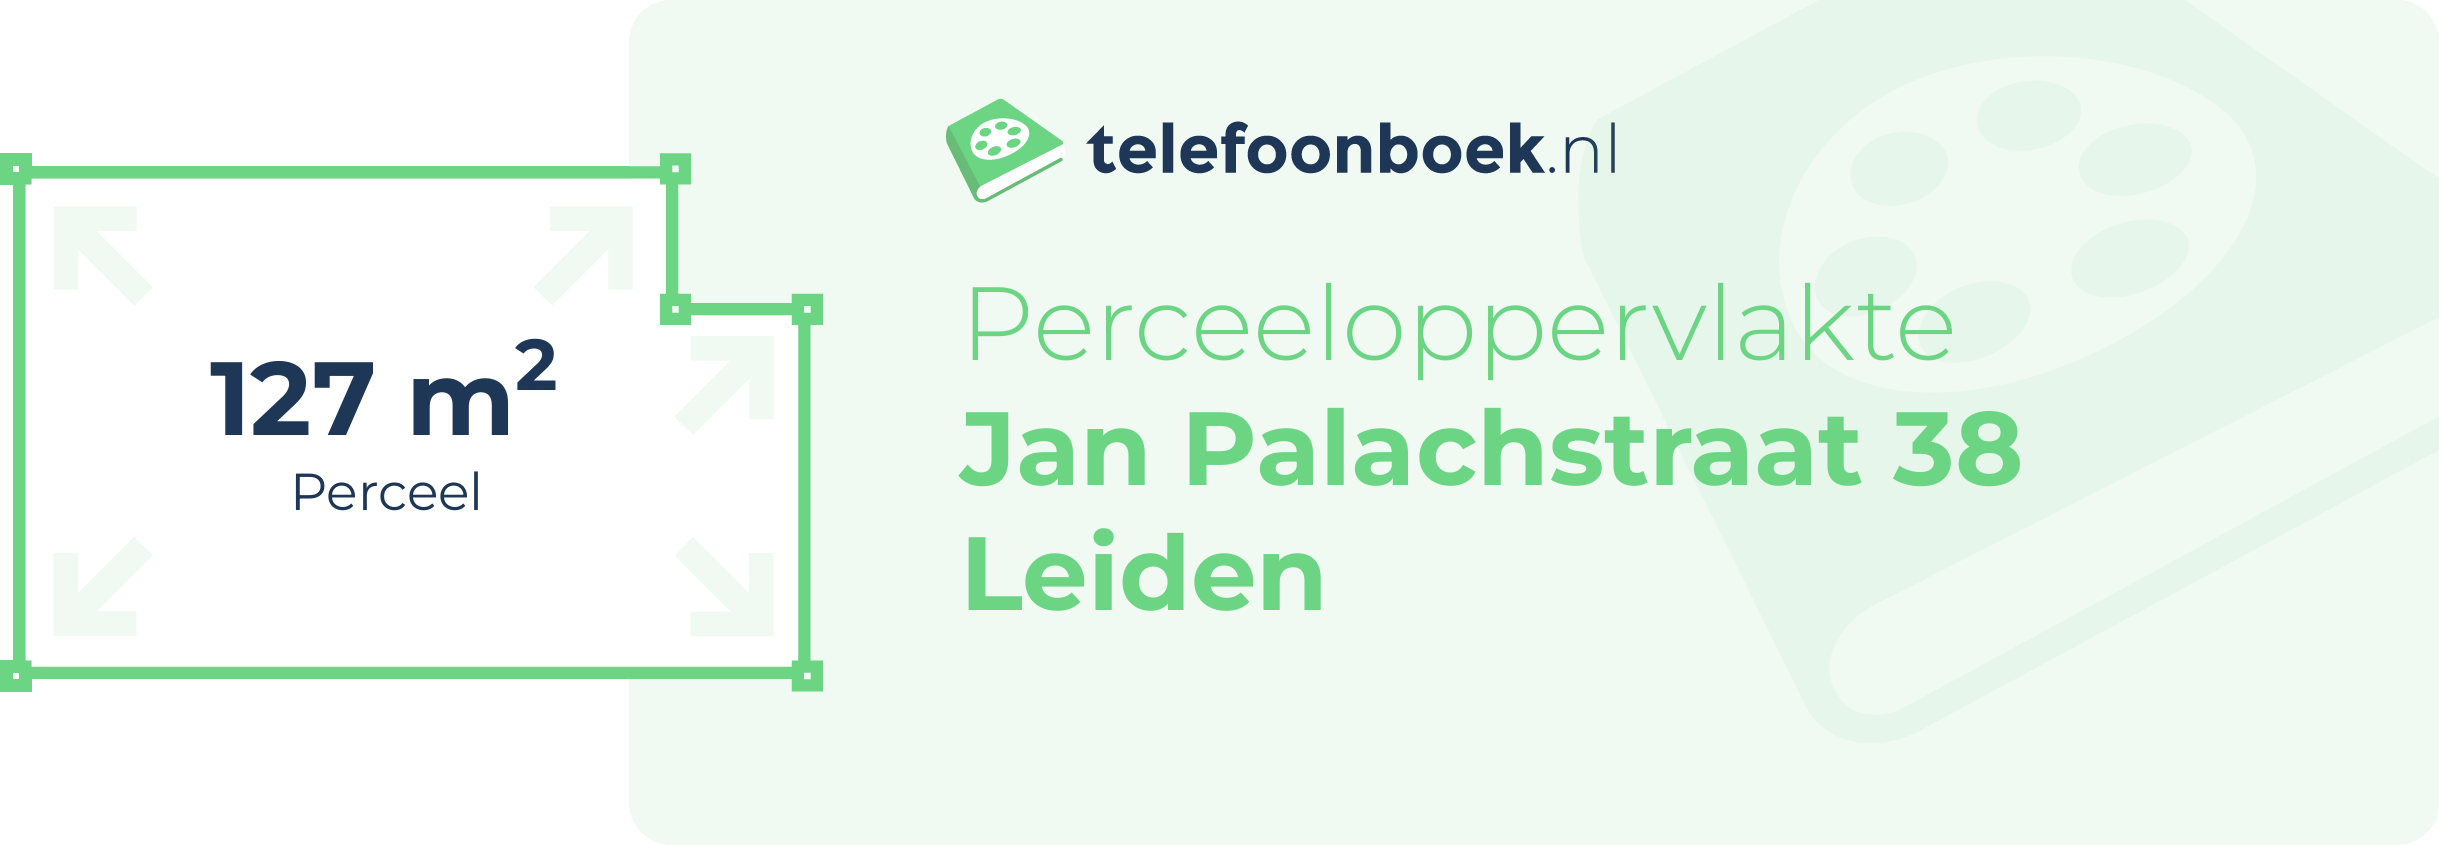 Perceeloppervlakte Jan Palachstraat 38 Leiden